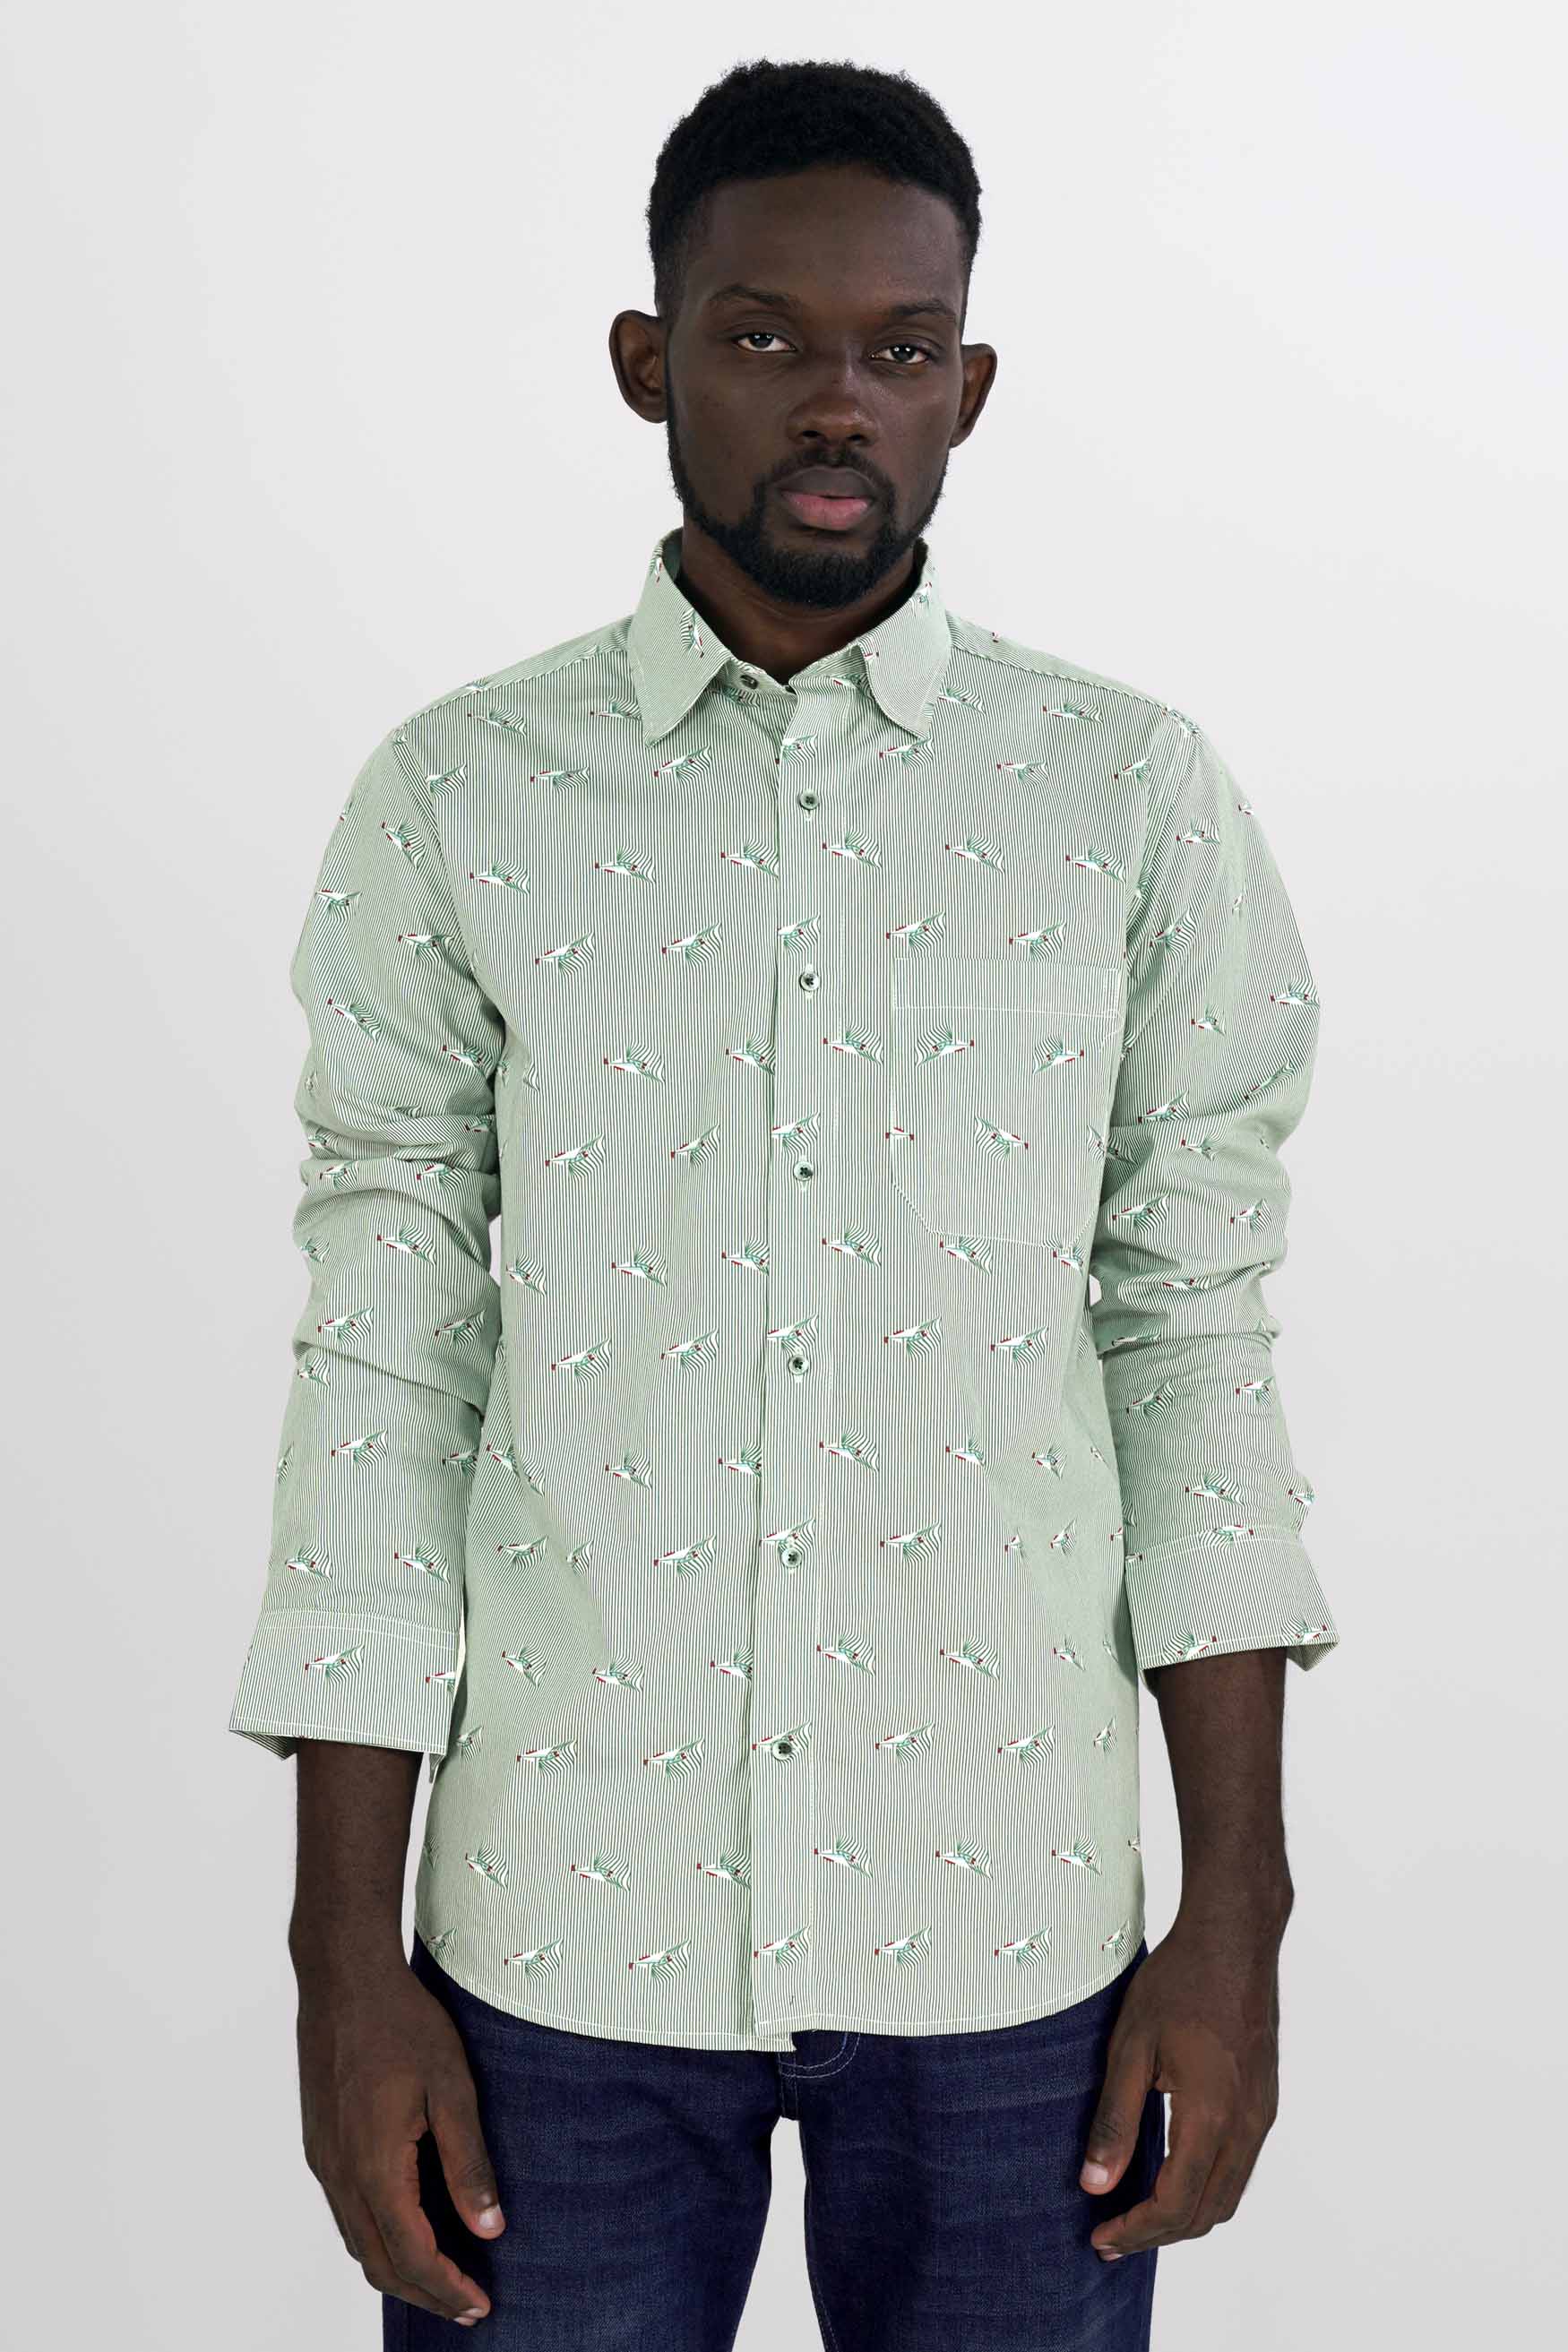 Bright White with Seafoam Green Striped Premium Cotton Shirt